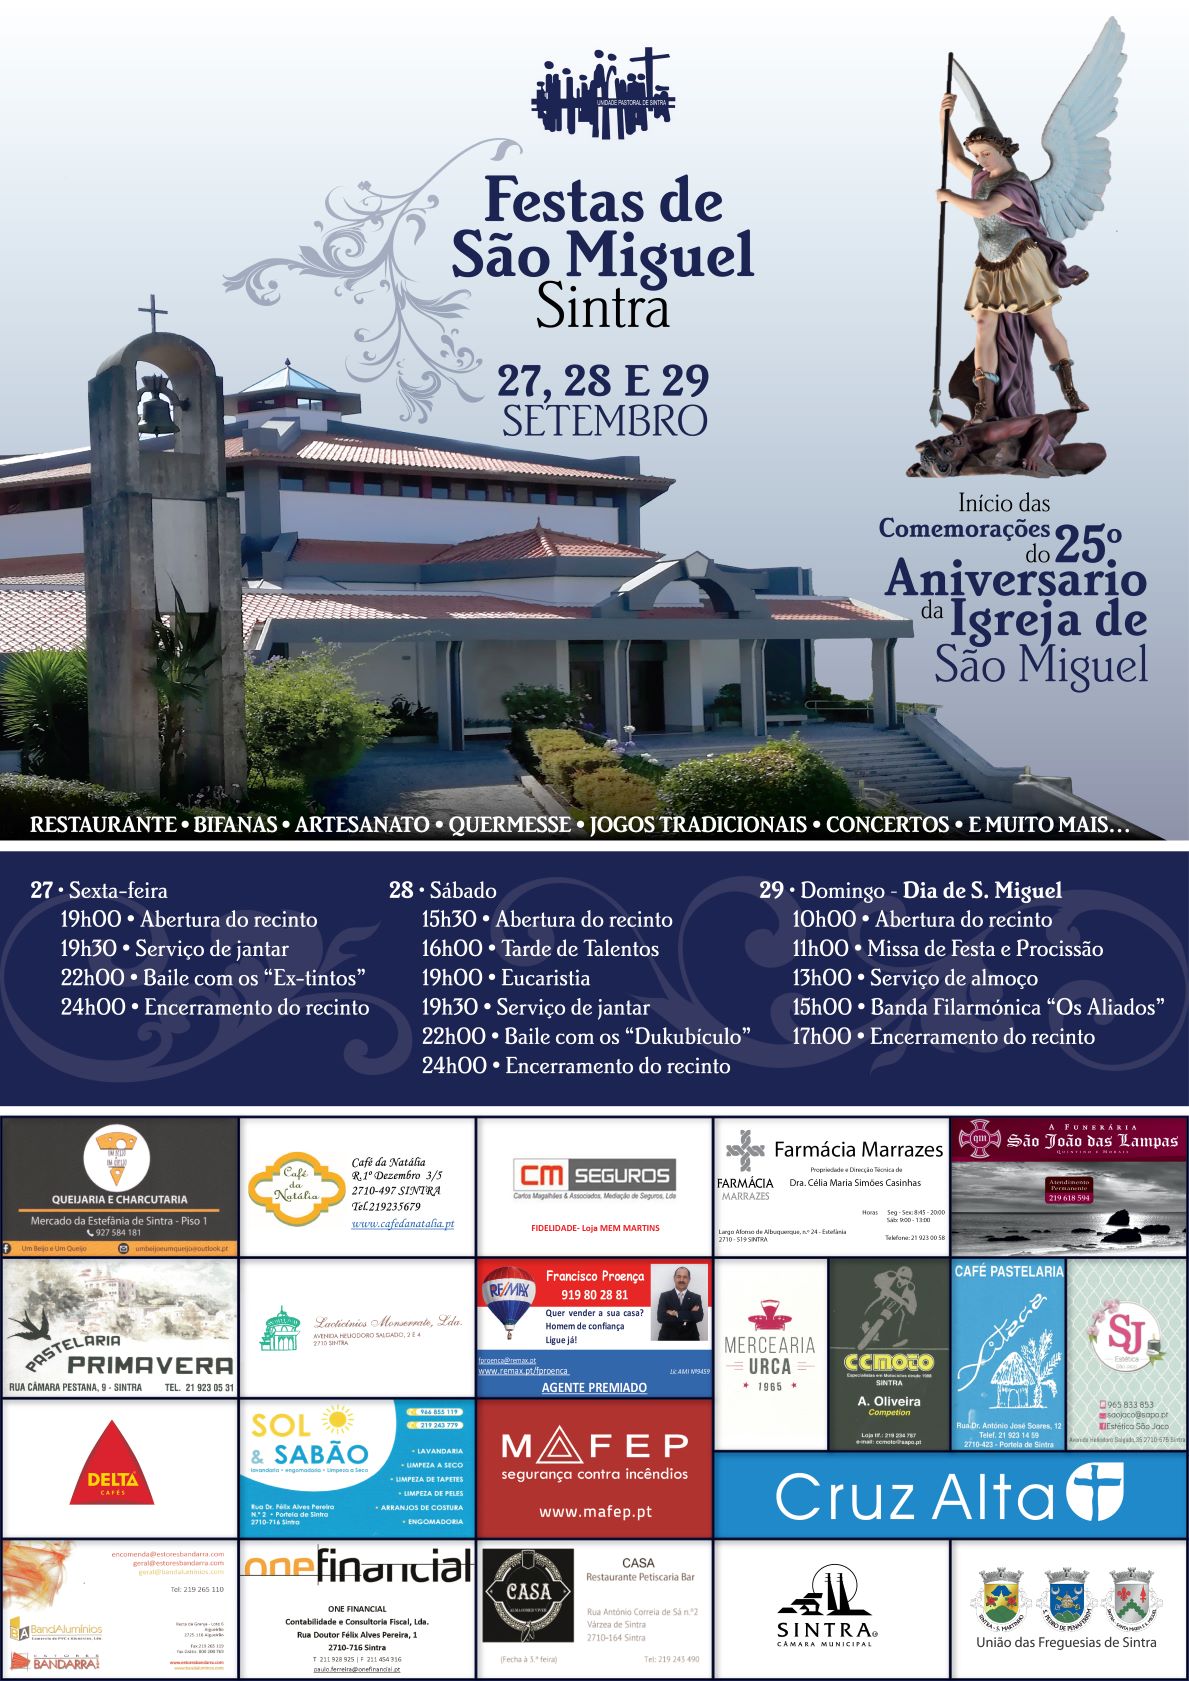 Peq   Comemoracoes do 25 Aniversario da Igreja de Sao Miguel